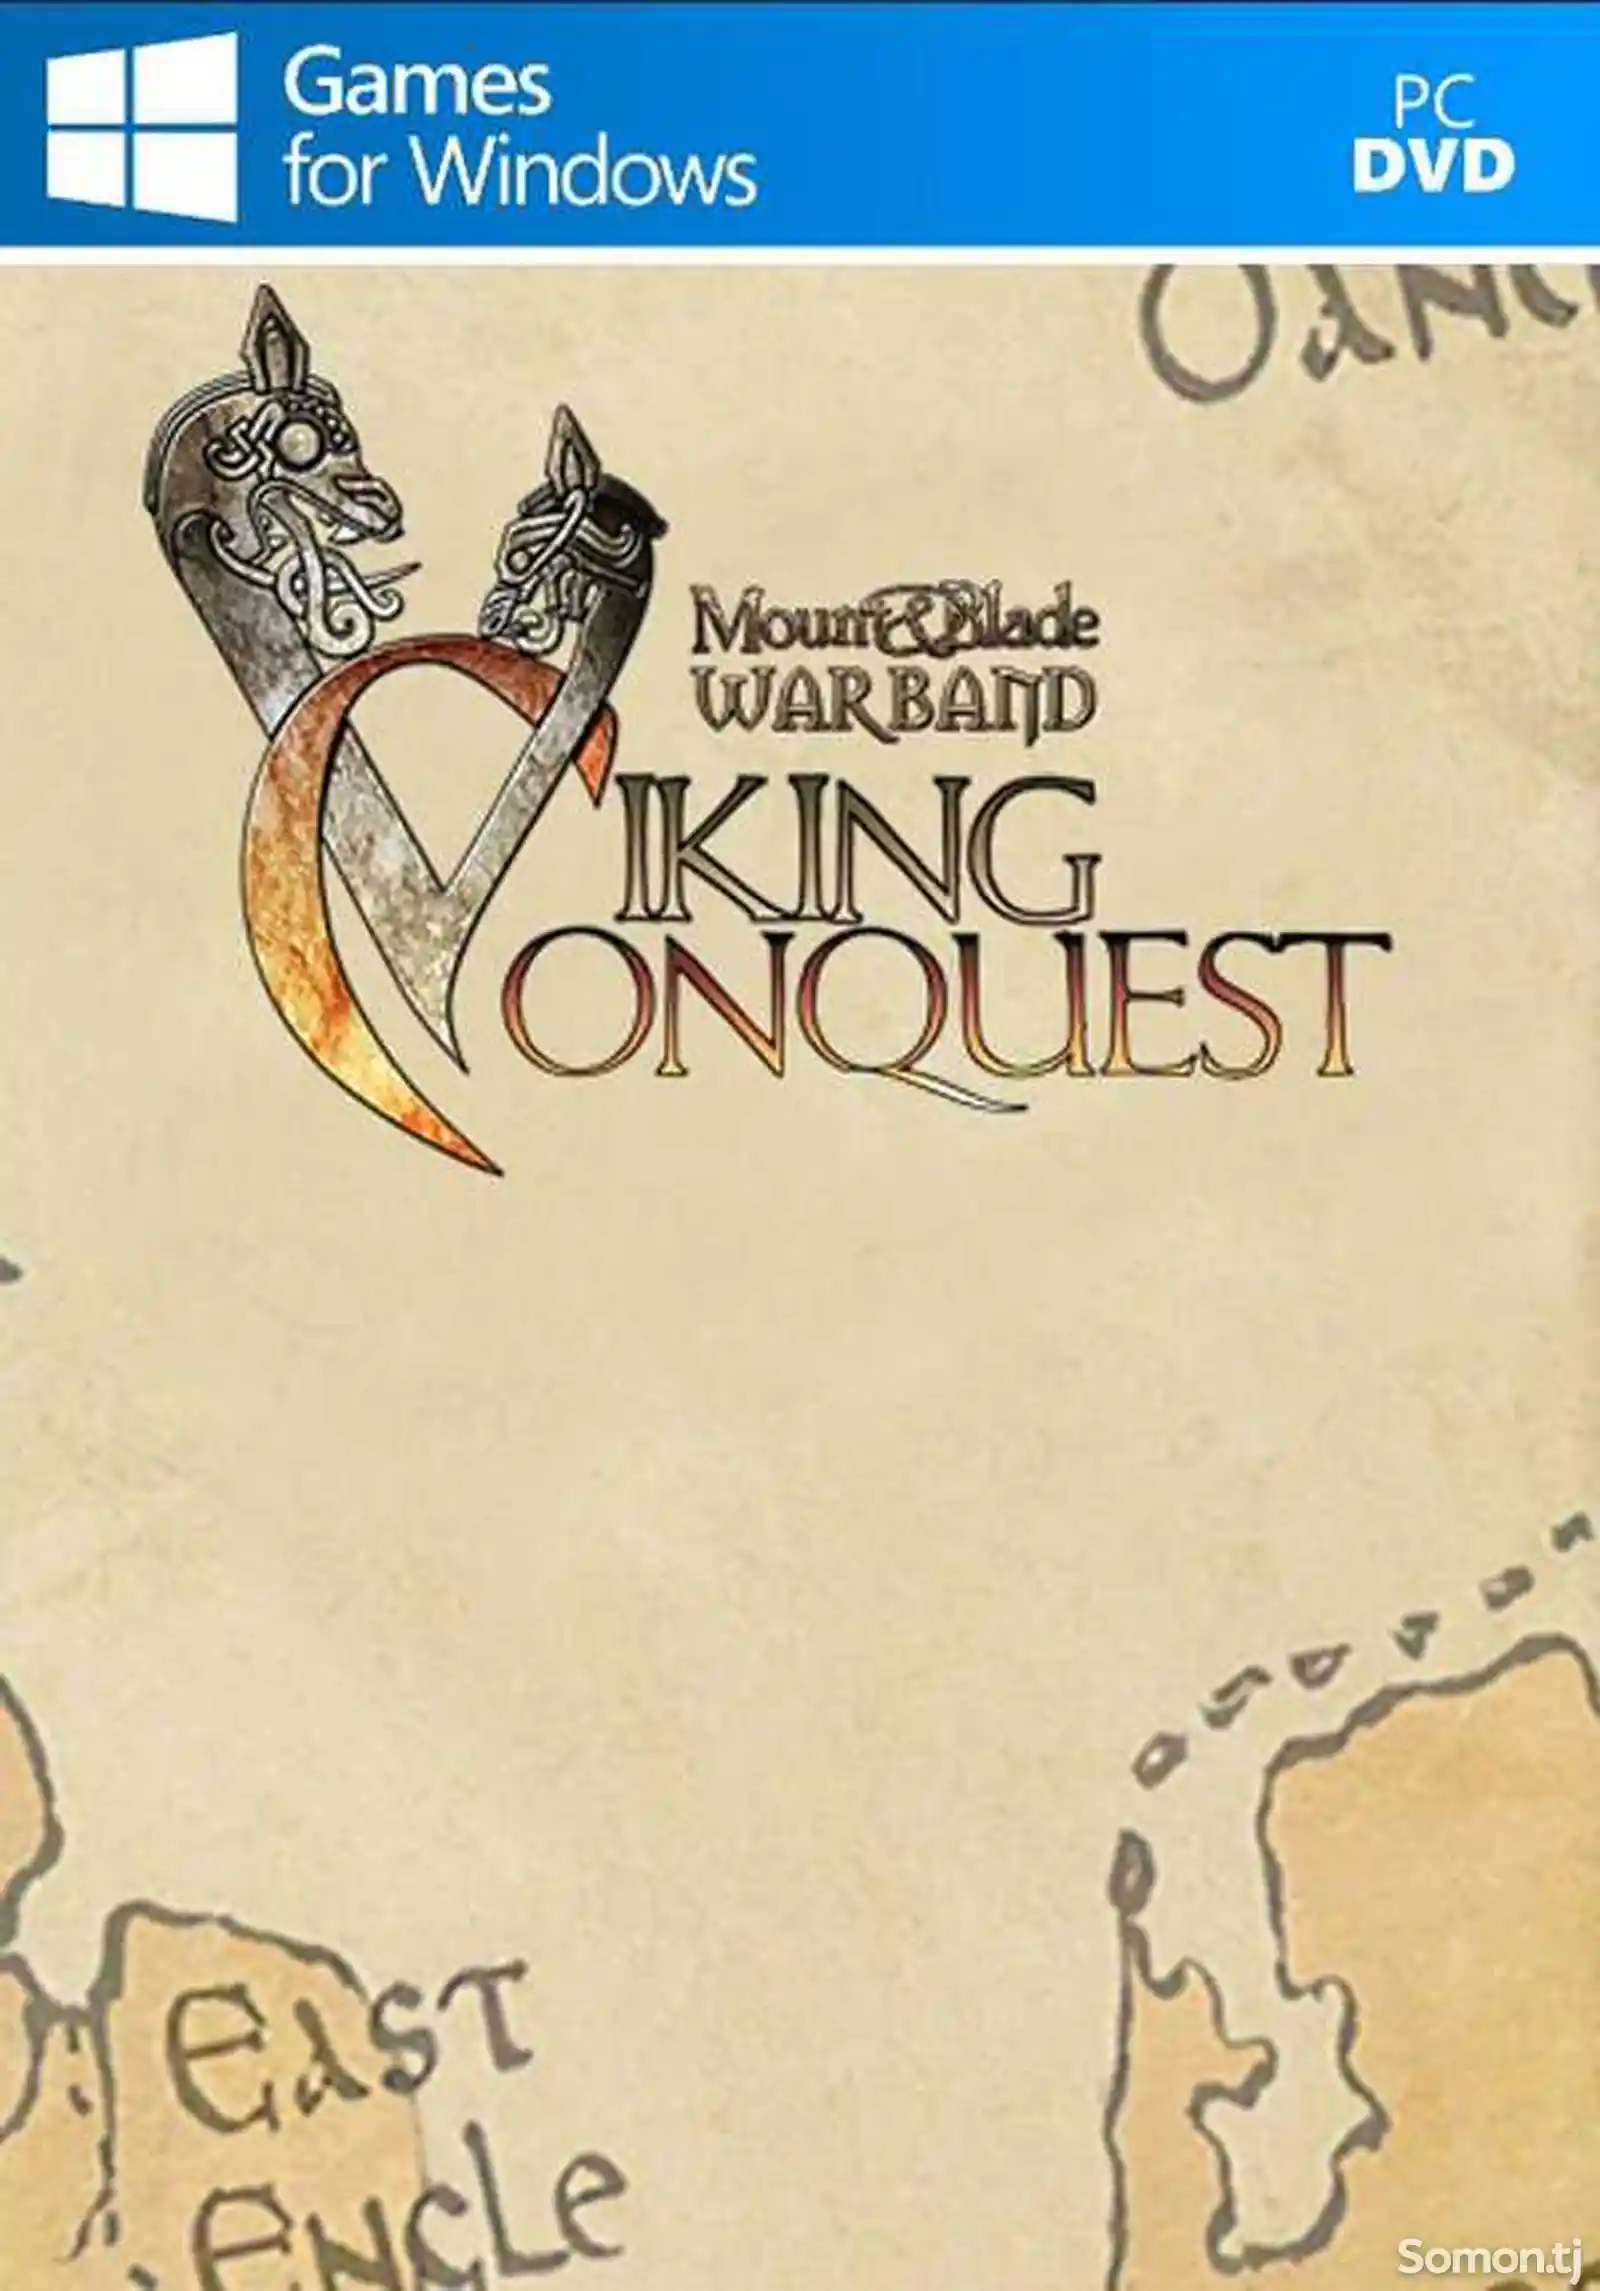 Игра Mount and blade warband viking conquest для компьютера-пк-pc-1